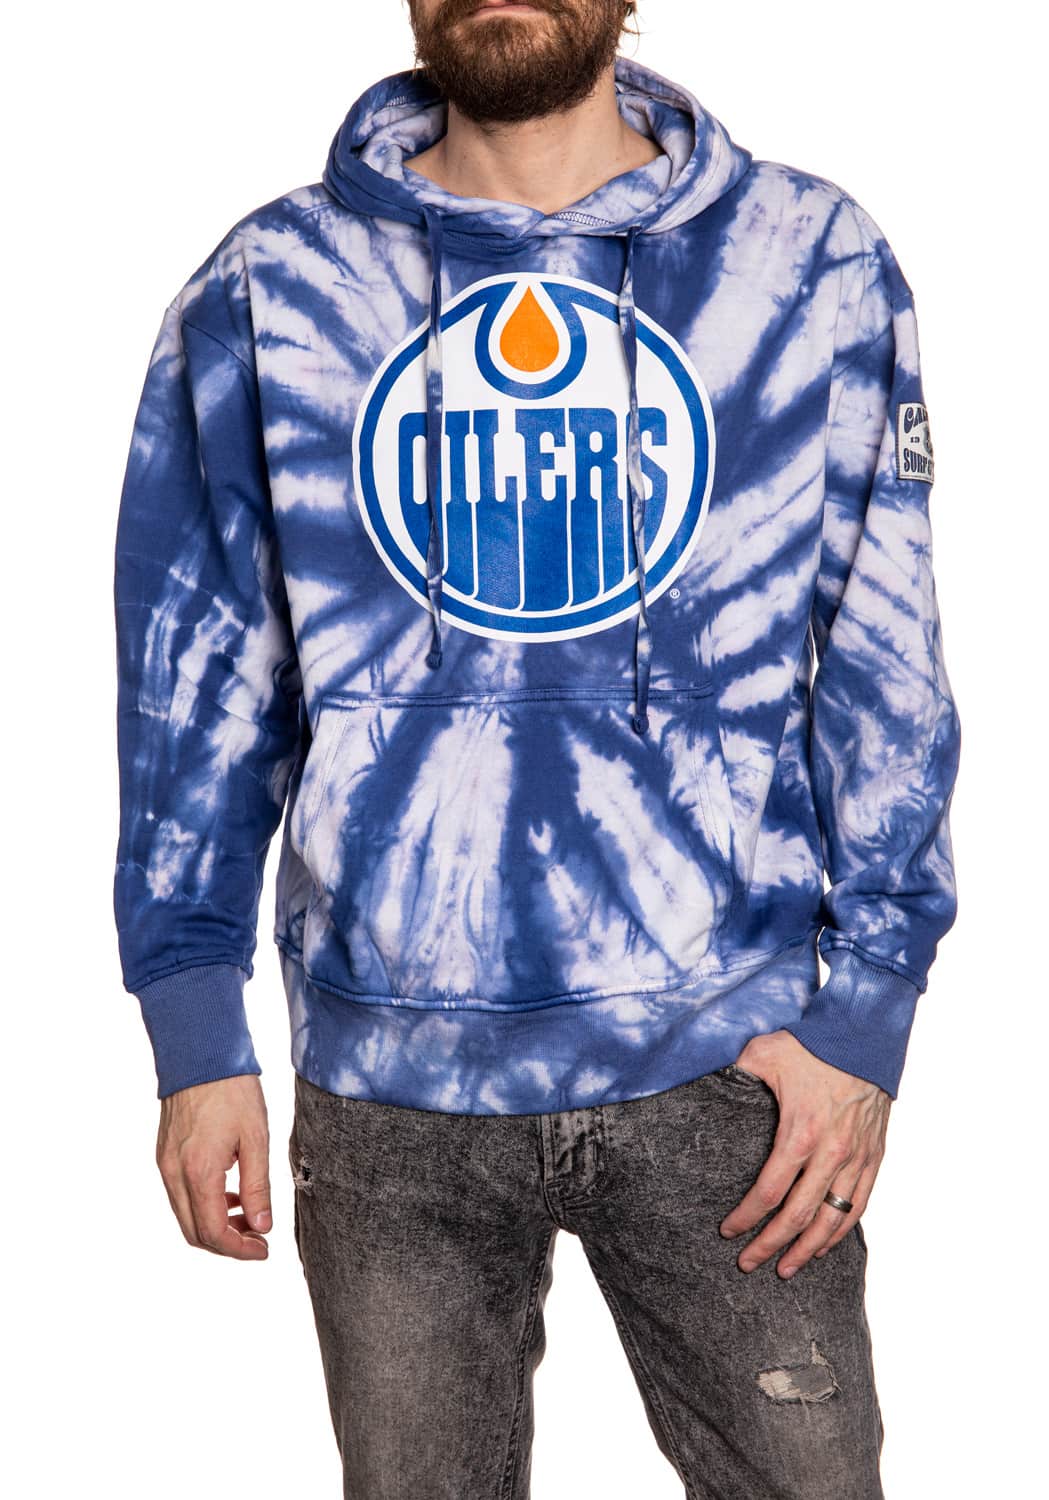 Edmonton Oilers Gear Retro NHL T-Shirt Sweatshirt Hoodie Gifts for Fans -  Bluefink